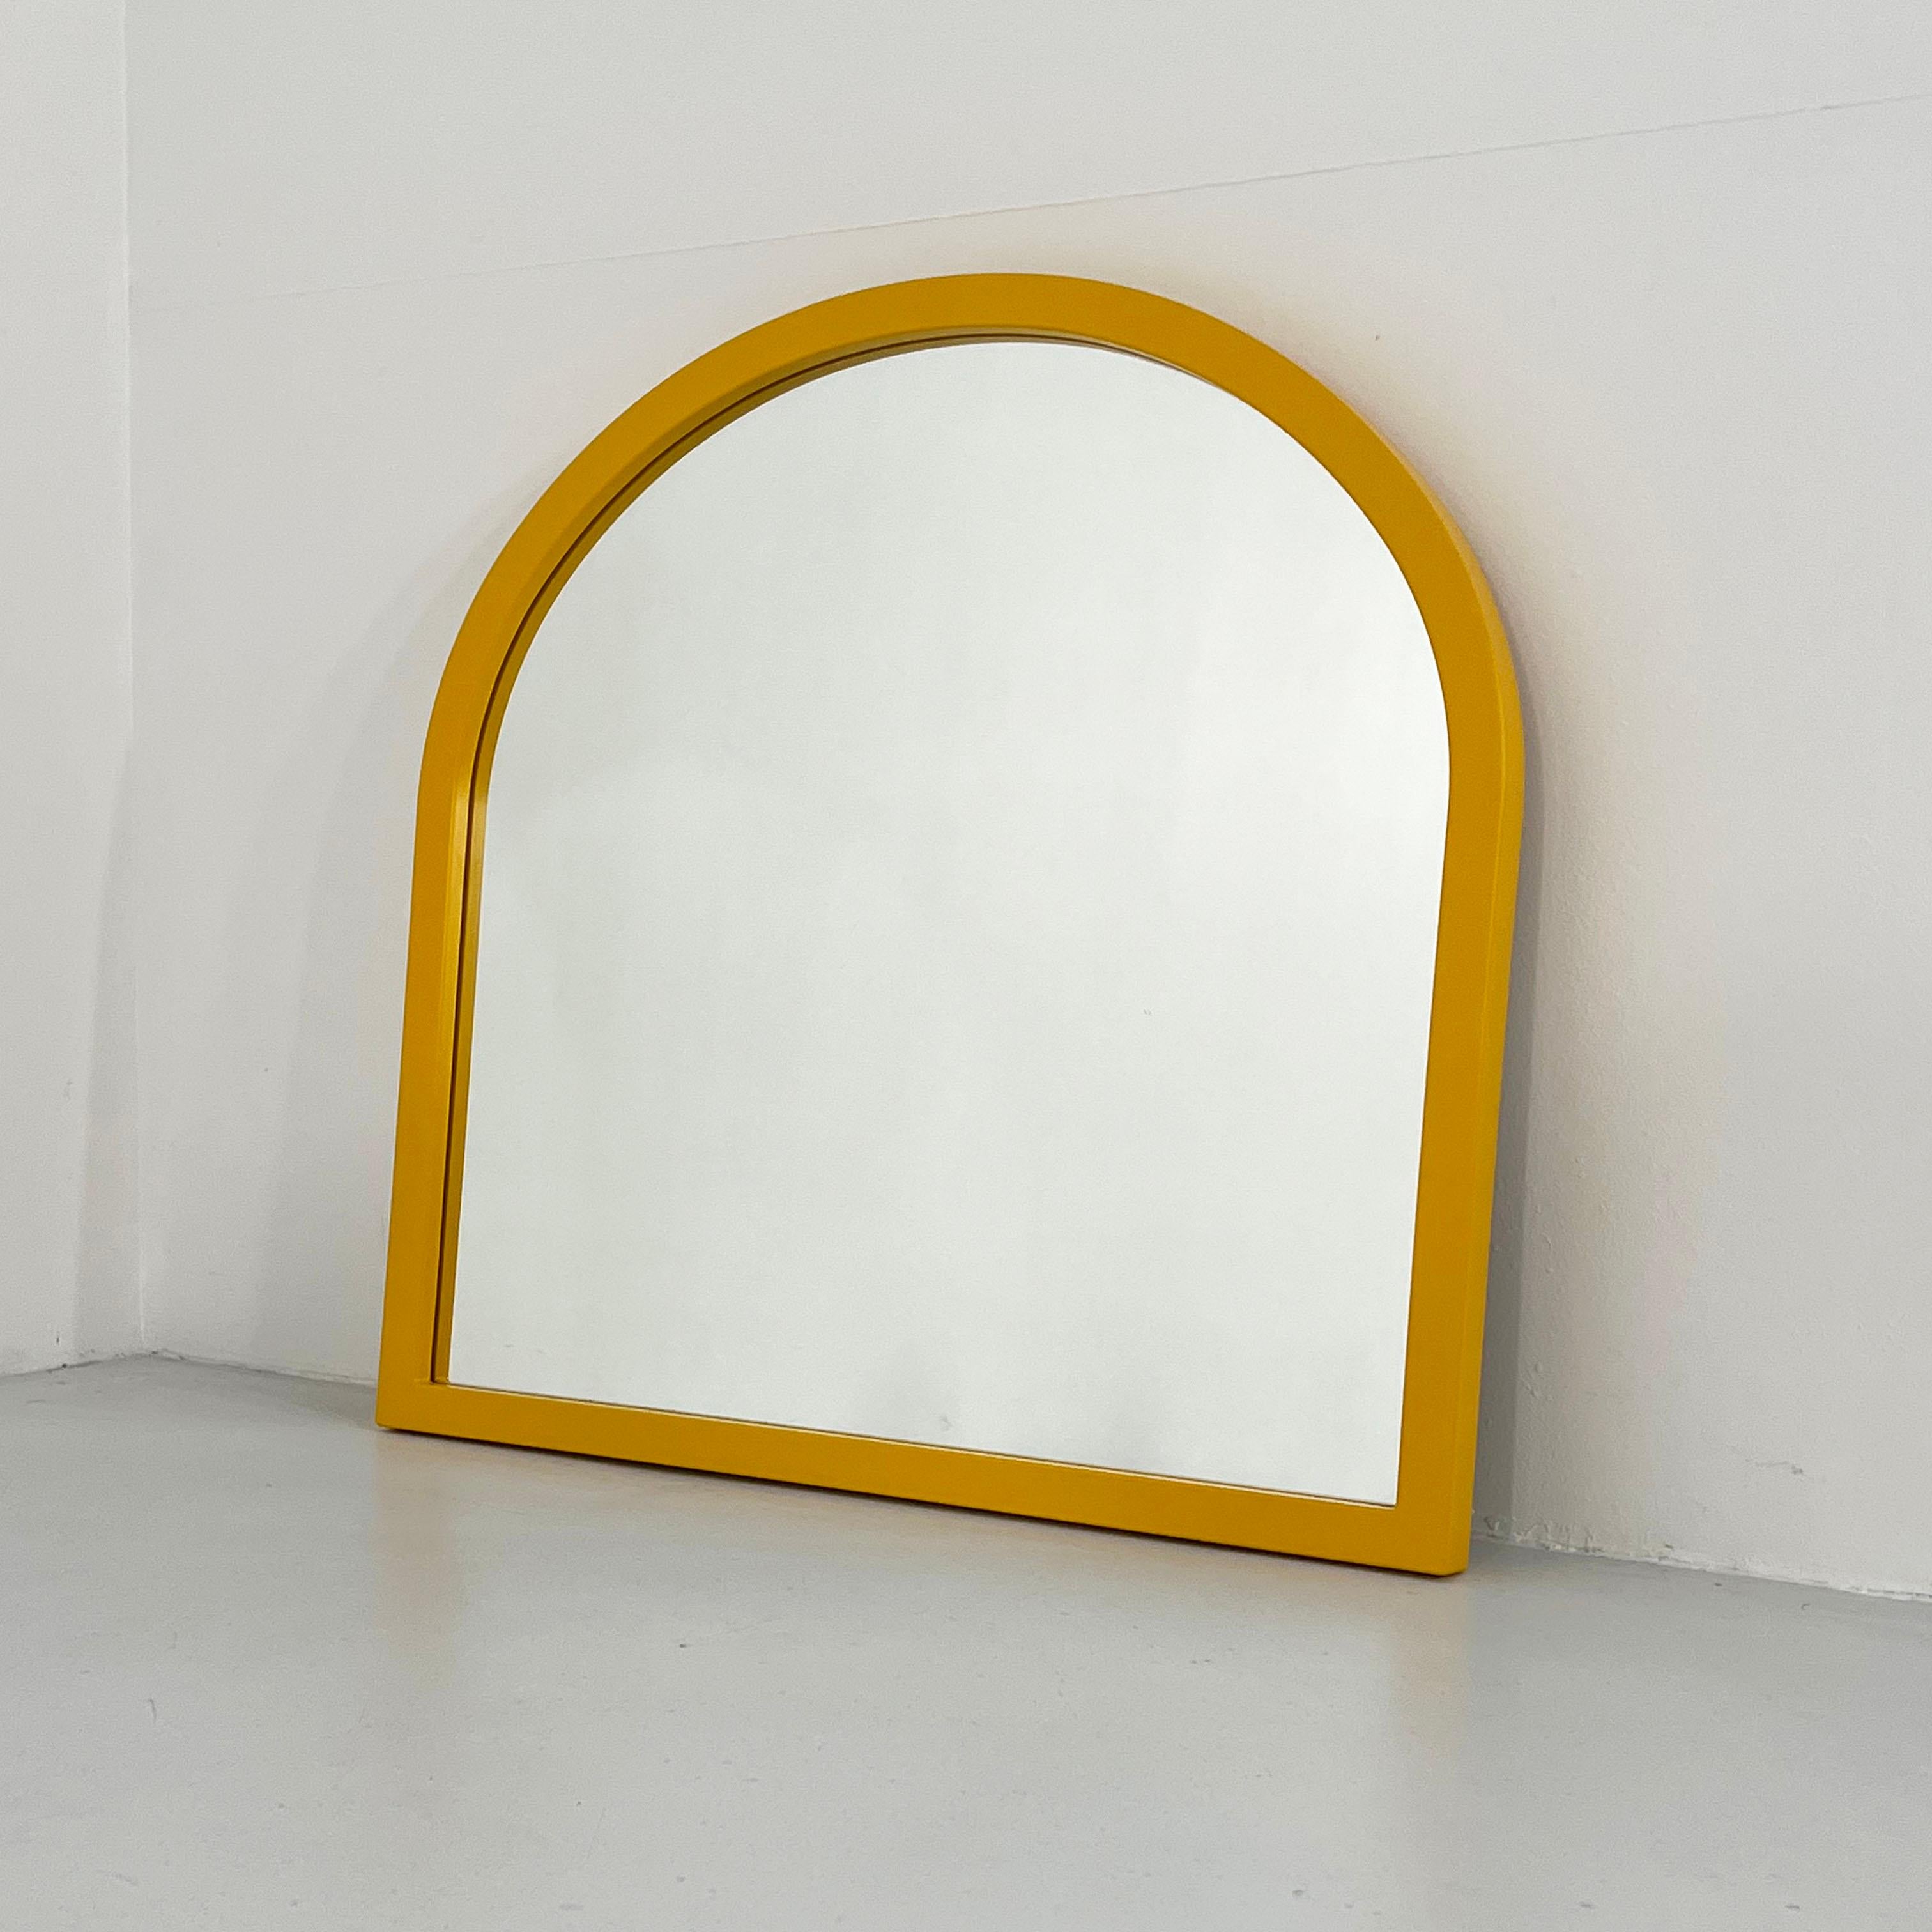 Yellow Frame Mirror Model 4720 by Anna Castelli Ferrieri for Kartell, 1980s
Designer - Anna Castelli Ferrieri
Producer - Kartell 
Model - Model 4720
Design Period - Eighties
Measurements - Width 65 cm x Depth 3 cm x Height 65 cm
Materials -